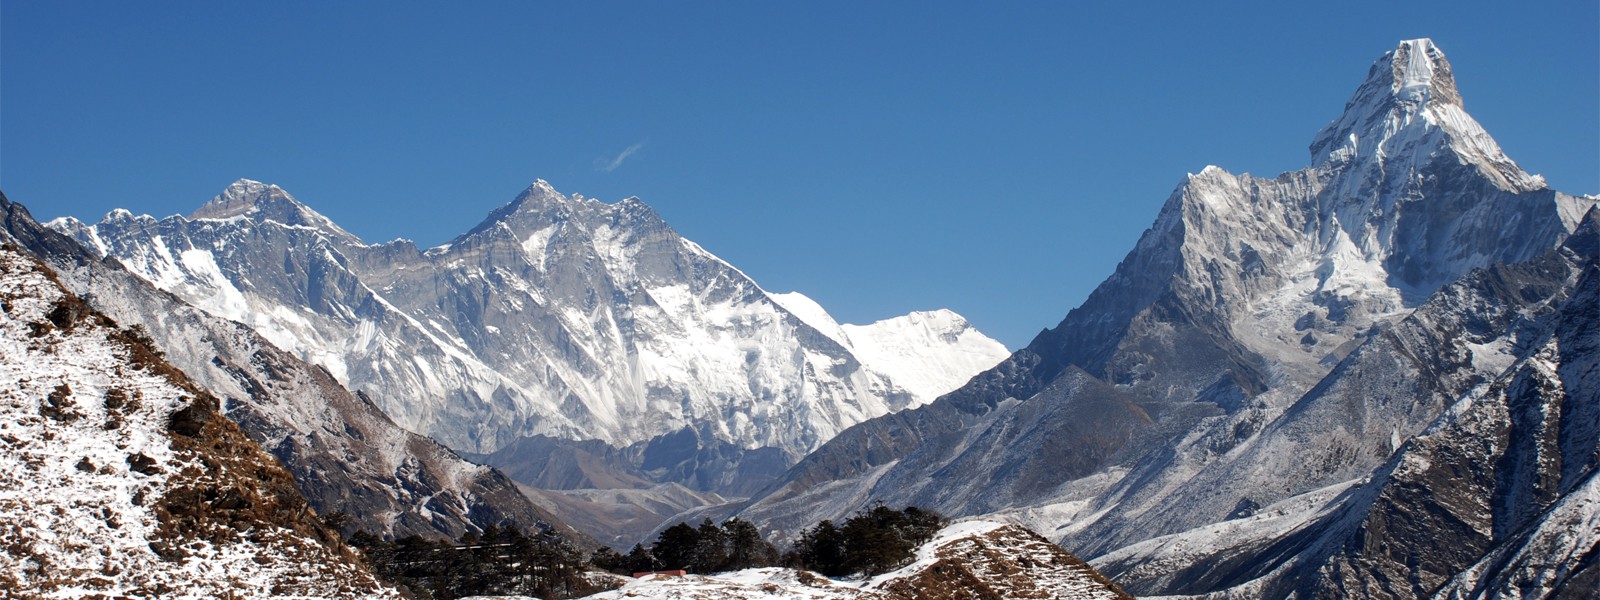 Everest Base Camp and Island Peak Climbing